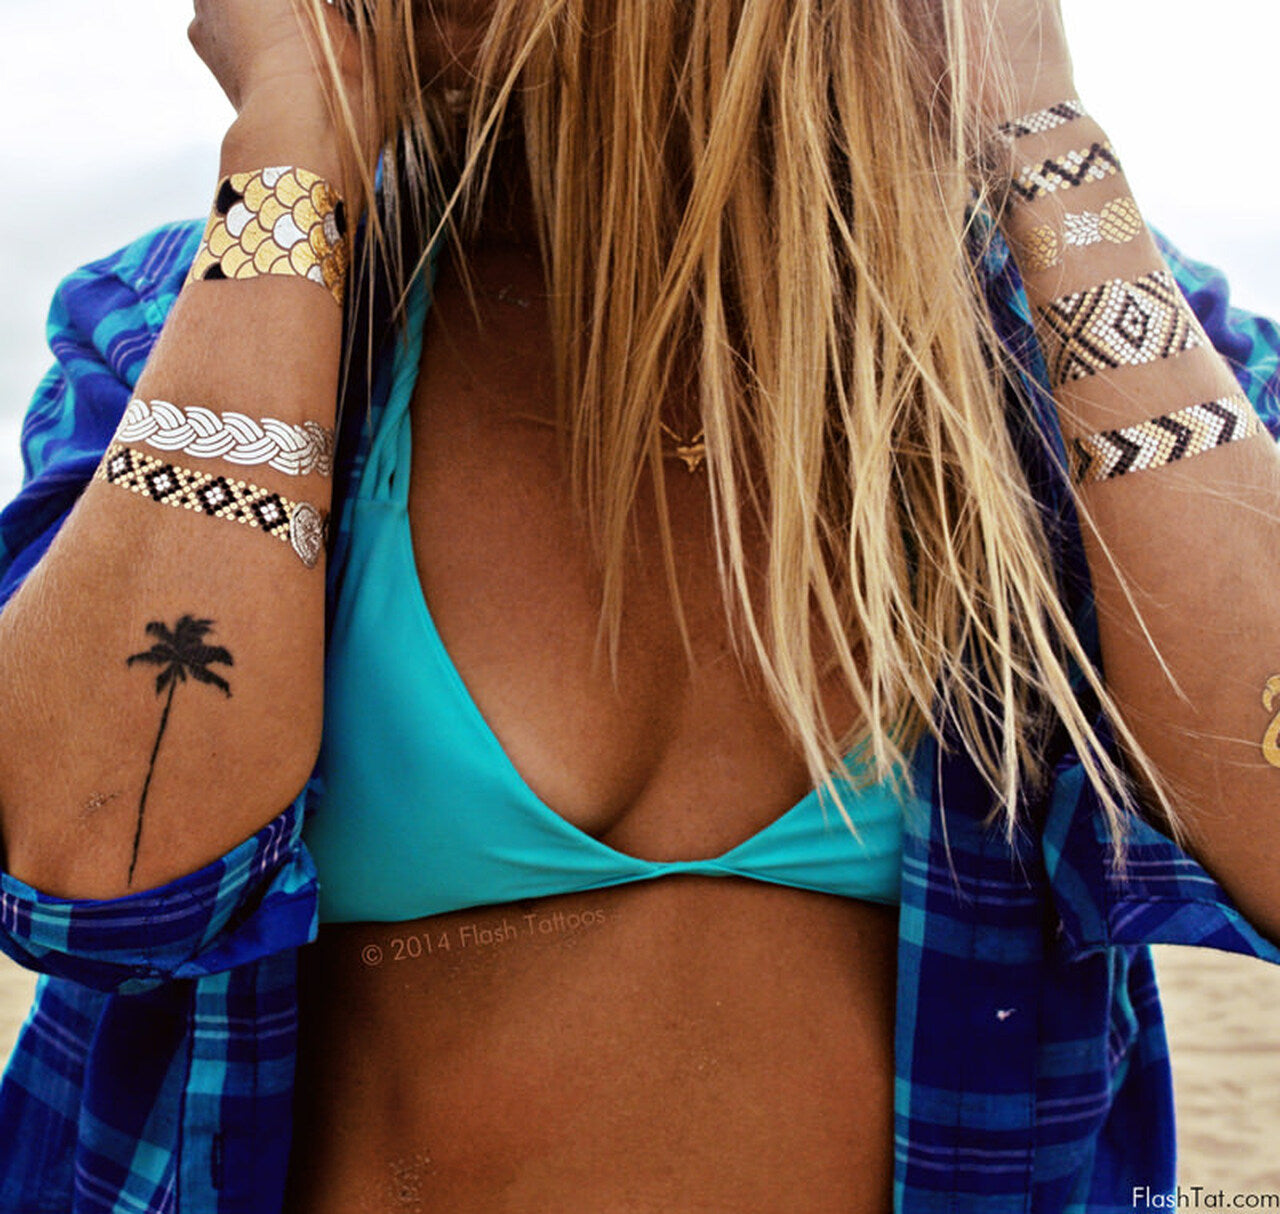 Tropical jewelry-inspired waterproof temporary beach metallic tattoos. #FLASHTAT @FlashTattoos